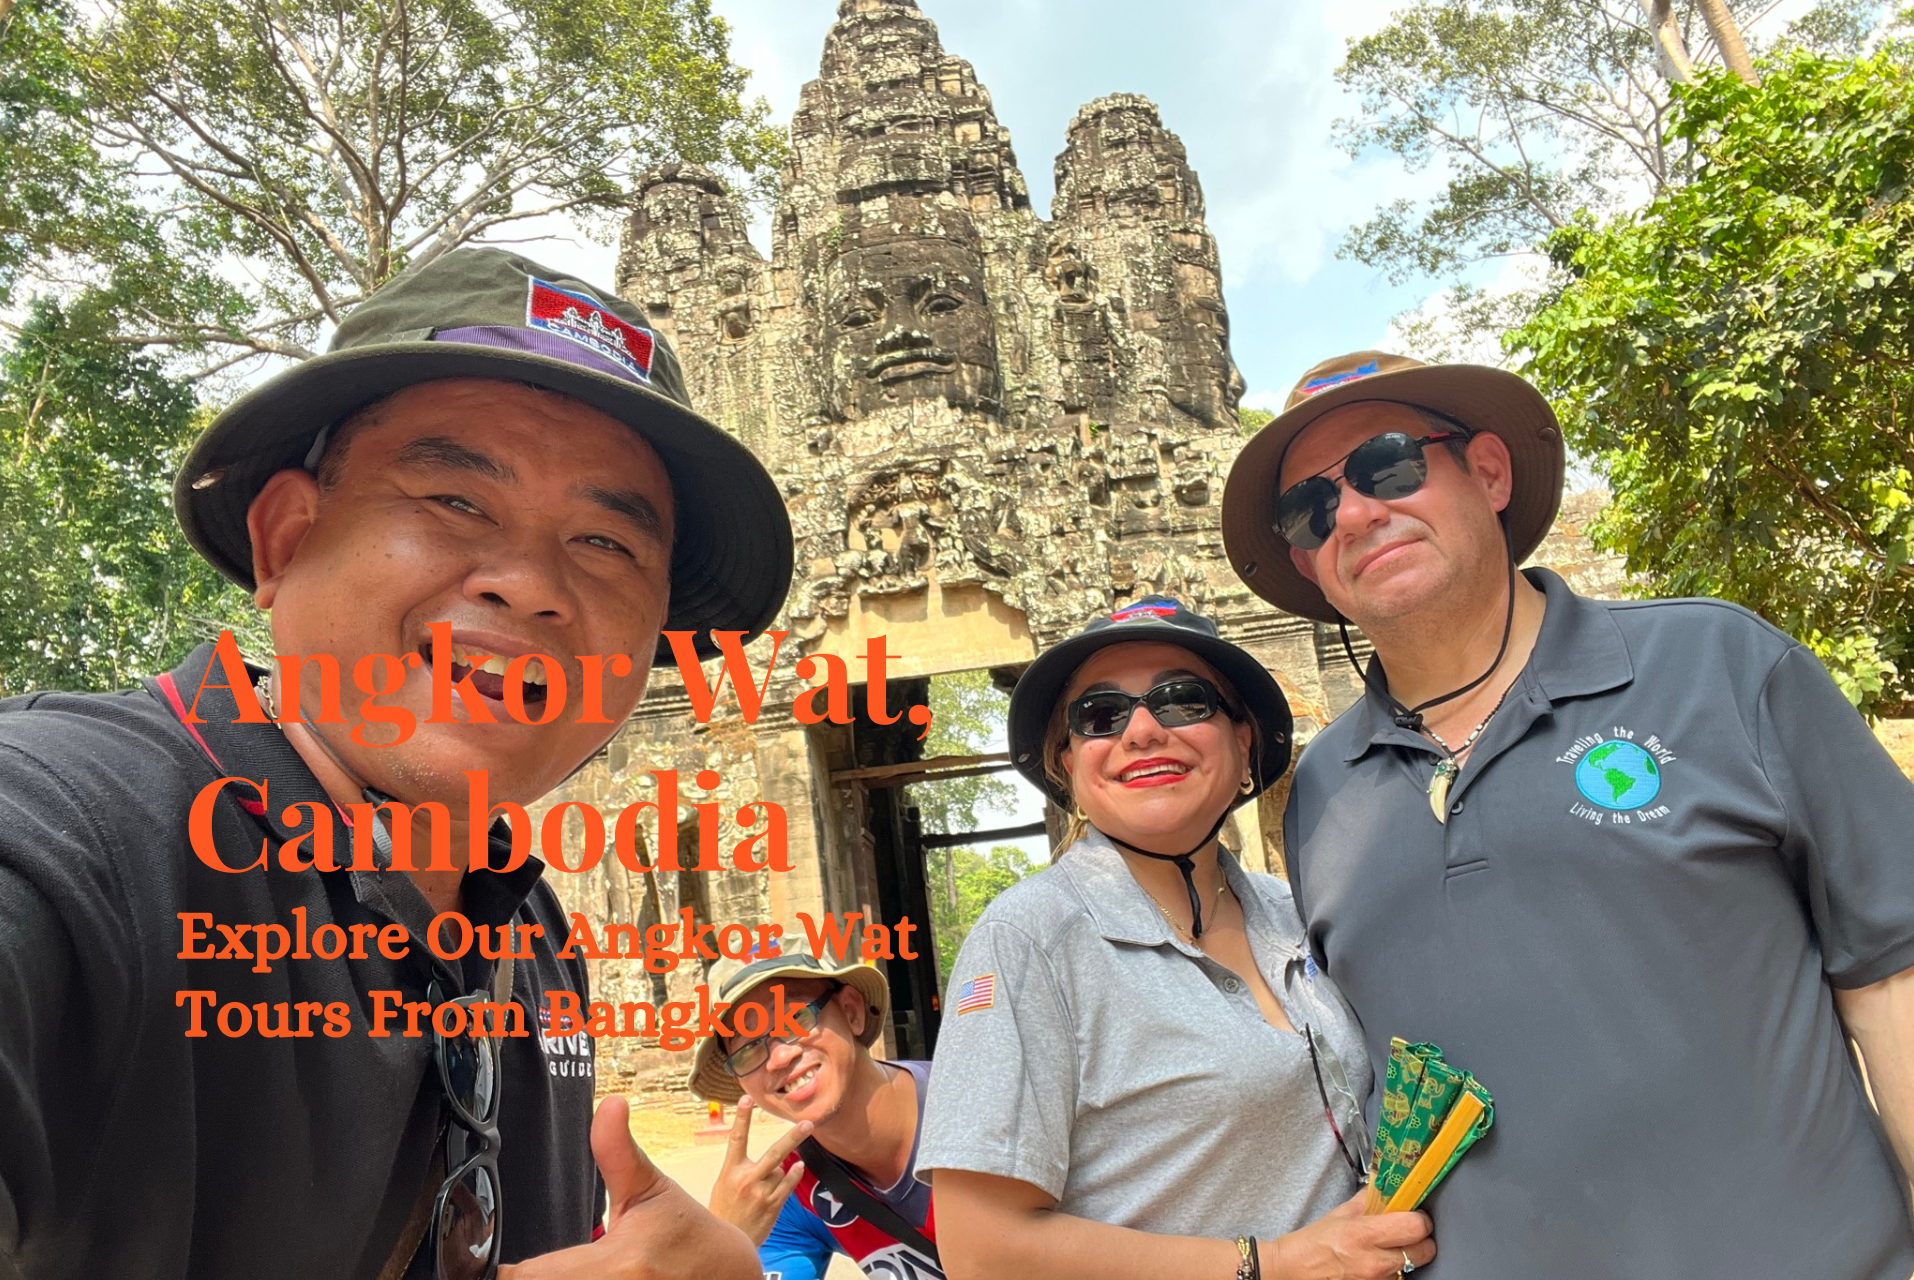 Angkor wat day tour from Bangkok